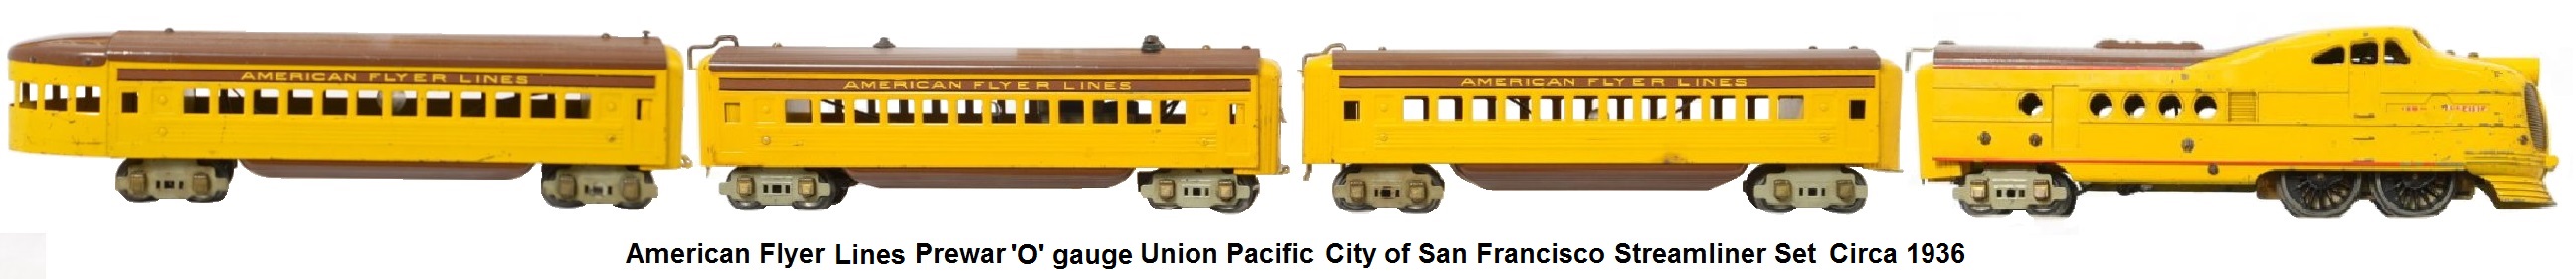 American Flyer 'O' gauge Union Pacific streamliner set